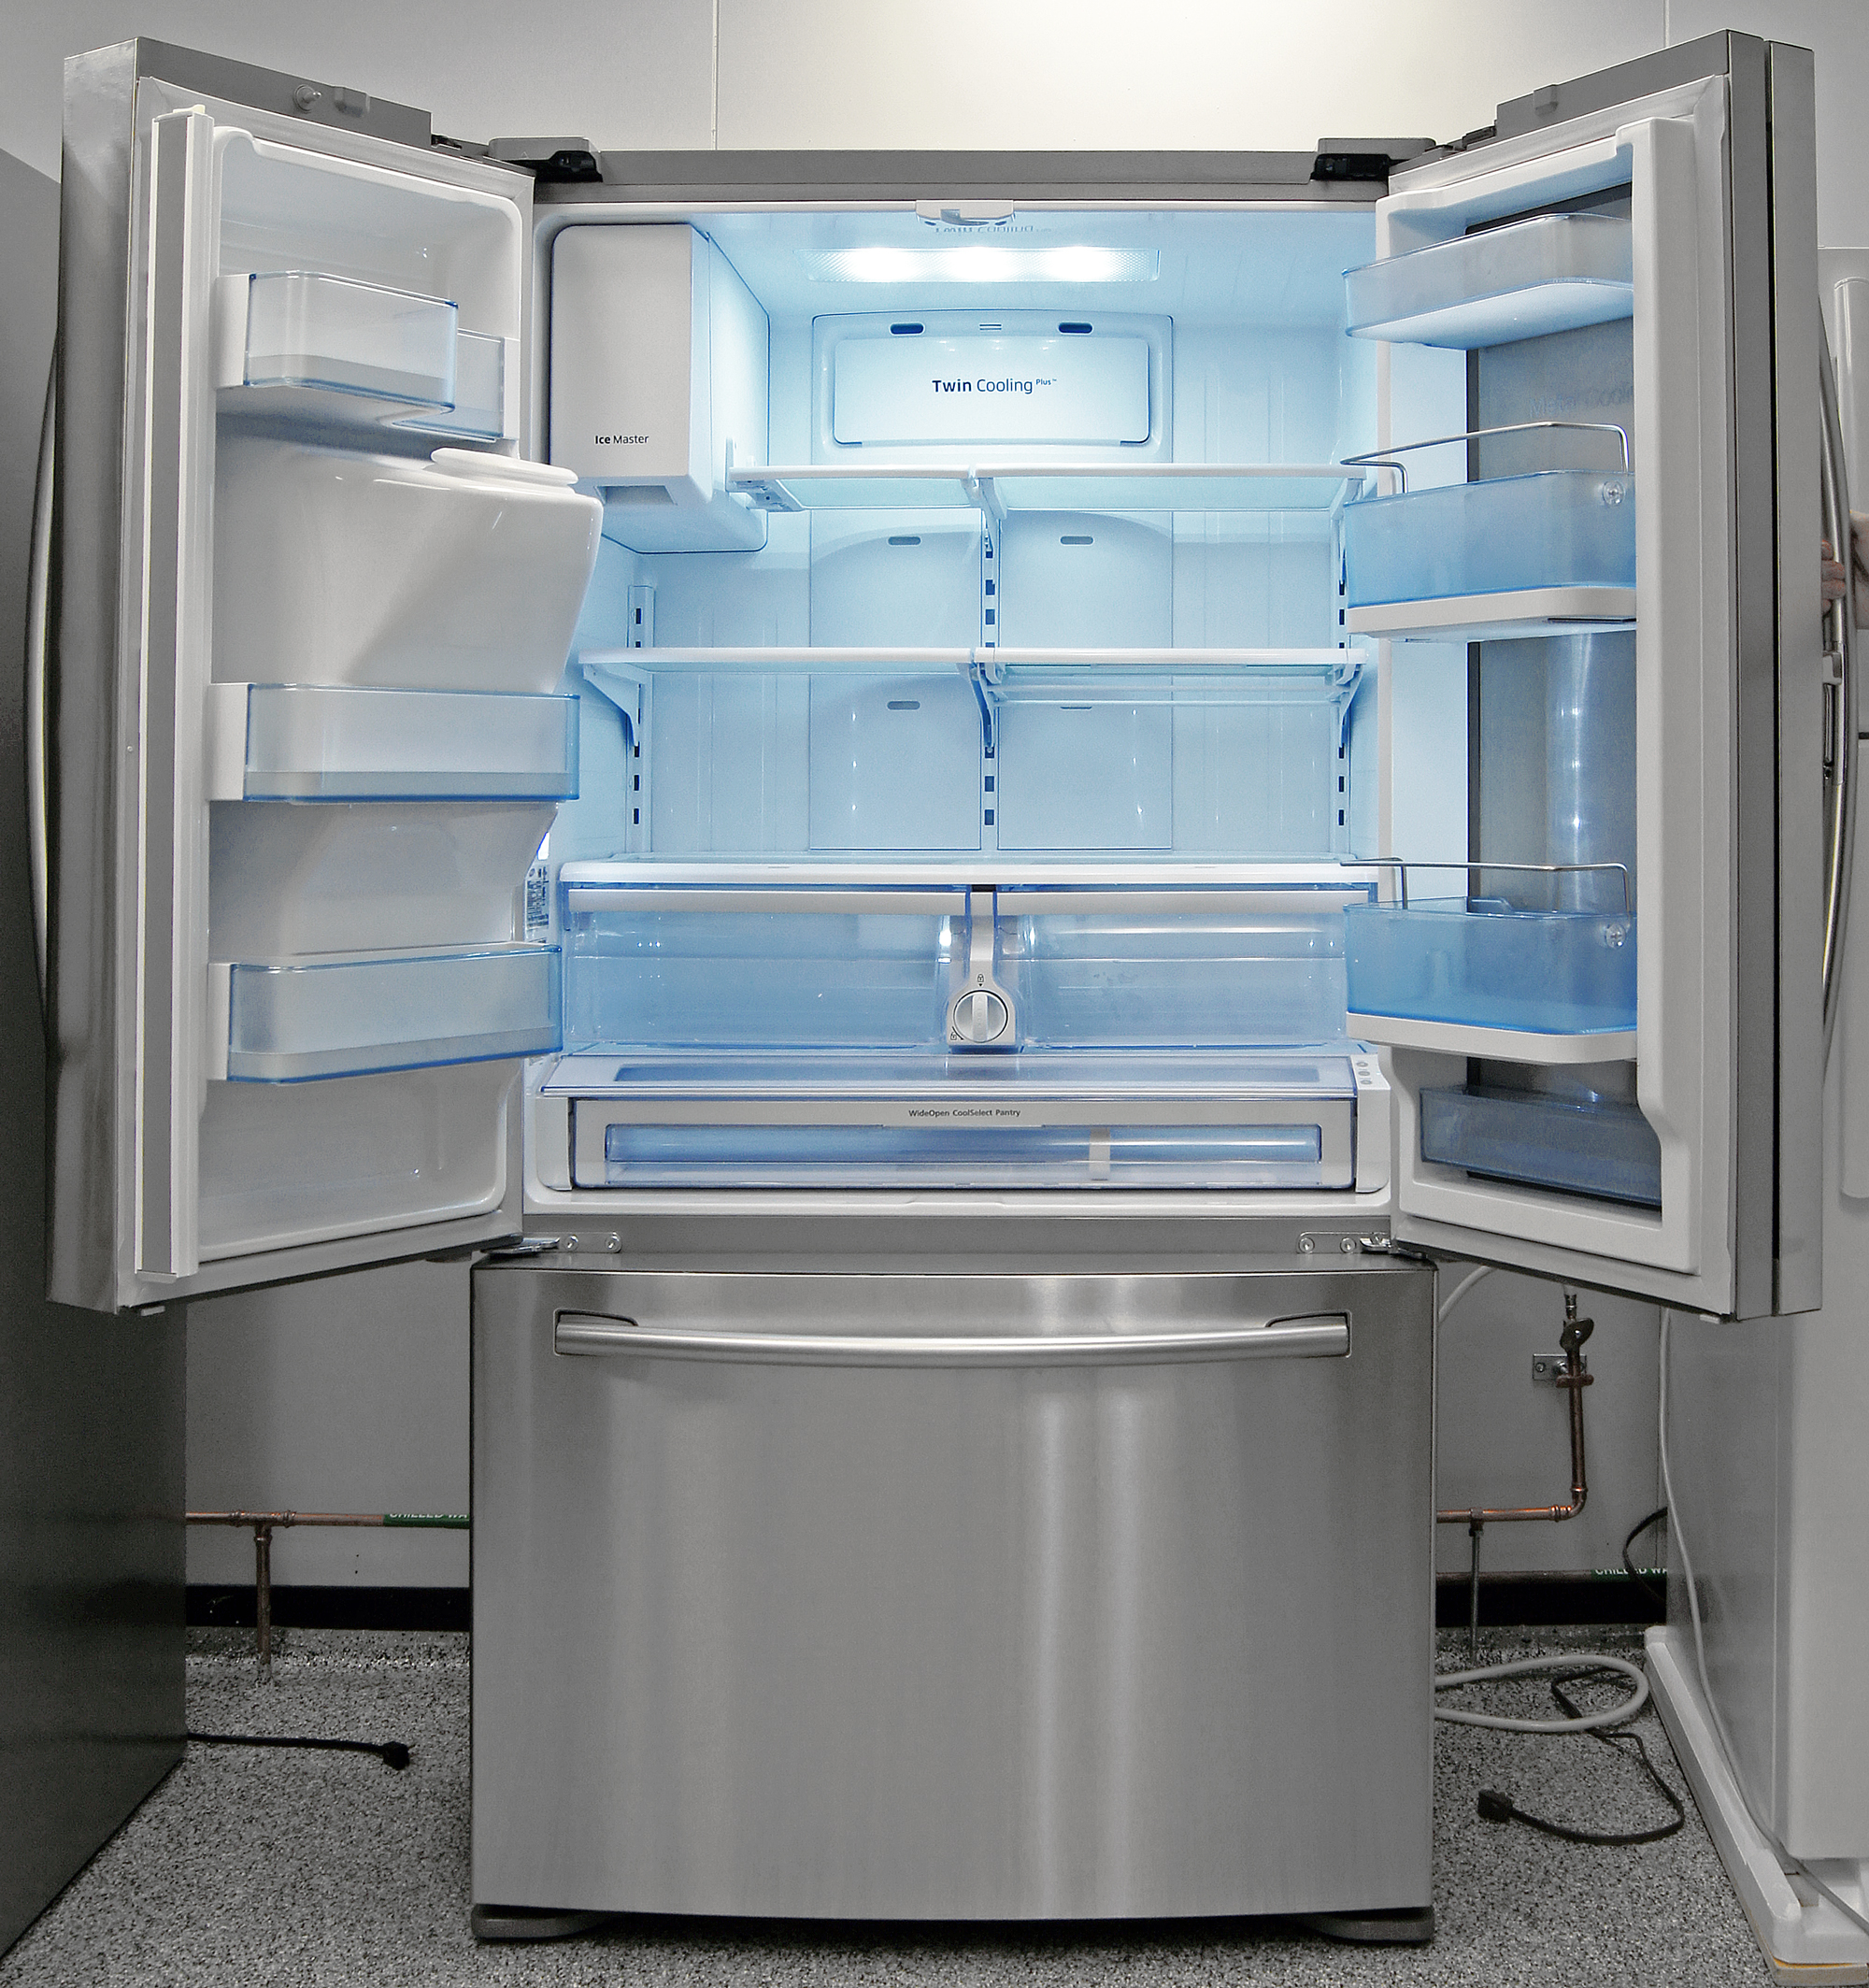 Холодильник двухкамерный купить в днс. Холодильник Samsung rf905qblaxw. Холодильник многодверный Samsung rf61k90407f. Холодильник Samsung rs64r5331b4. Холодильник двухдверный с морозильной камерой самсунг.